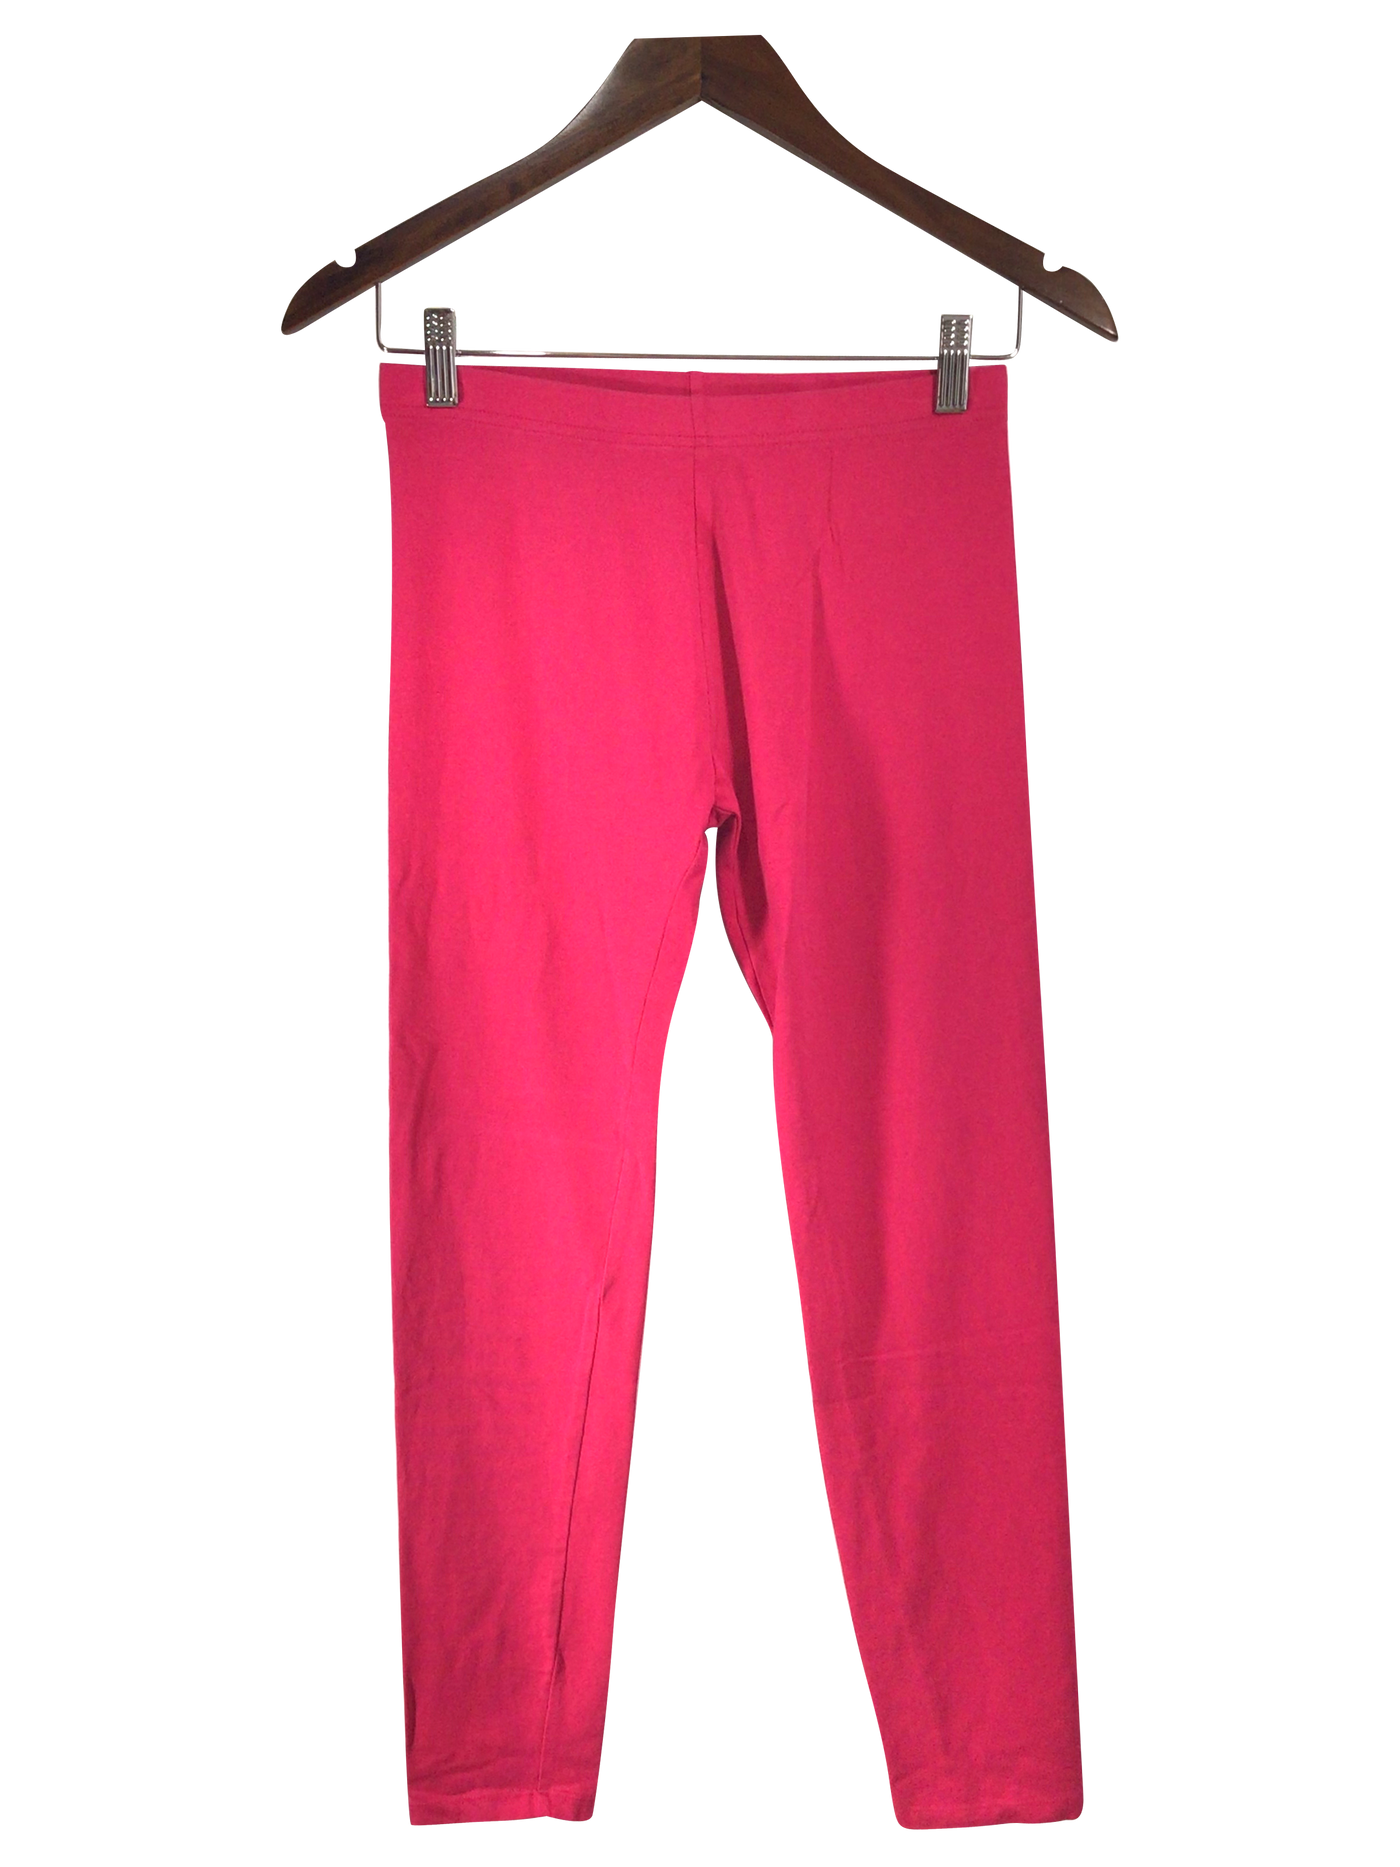 JOE FRESH Pant Regular fit in Pink - Size XL | 5 $ KOOP